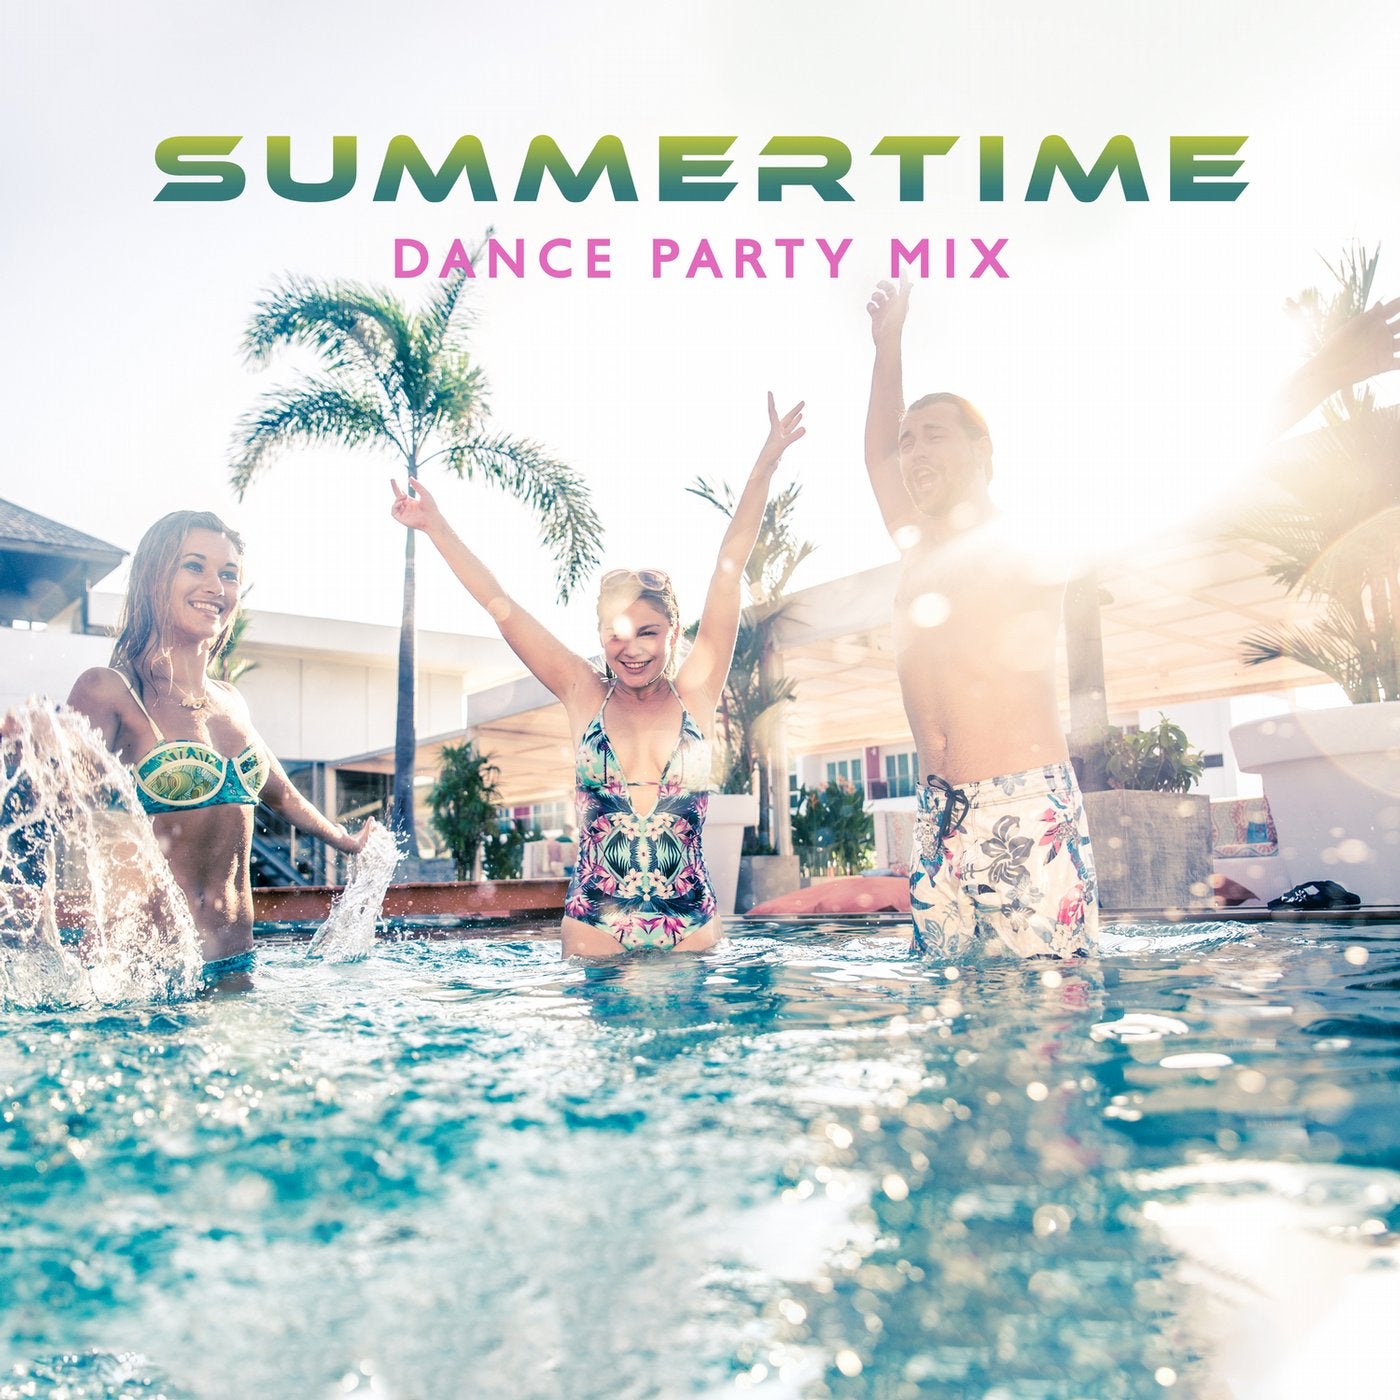 Summertime Dance Party Mix